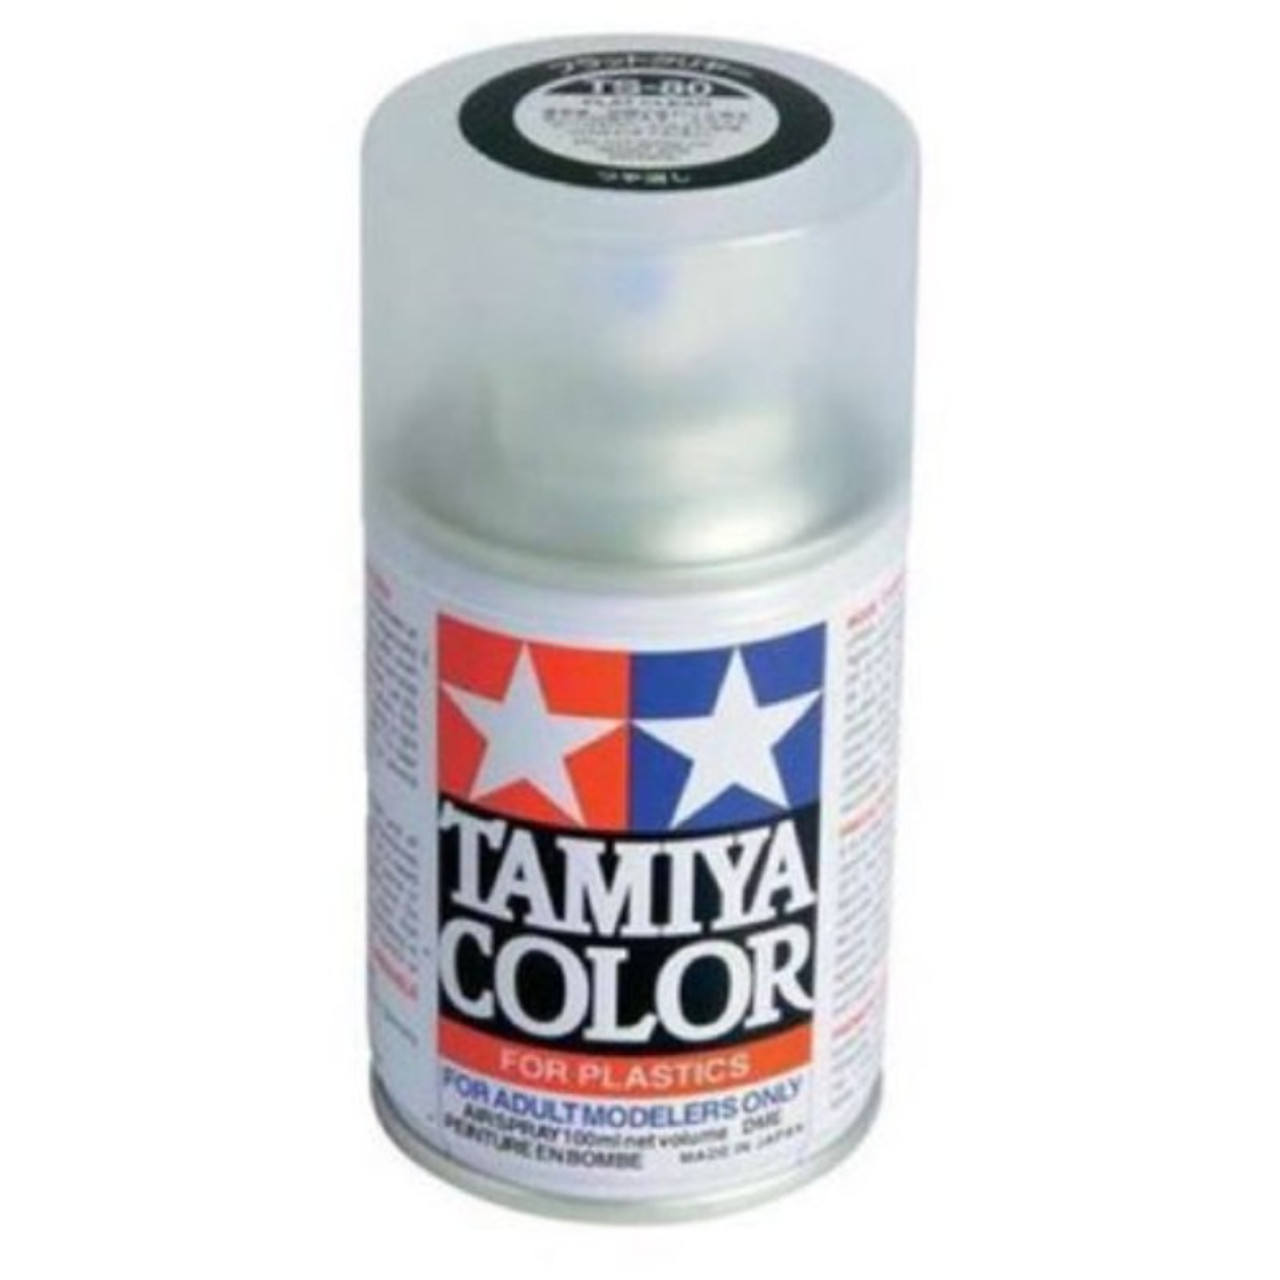 Tamiya 85080 TS-80 Flat Clear Spray Paint / Tamiya USA